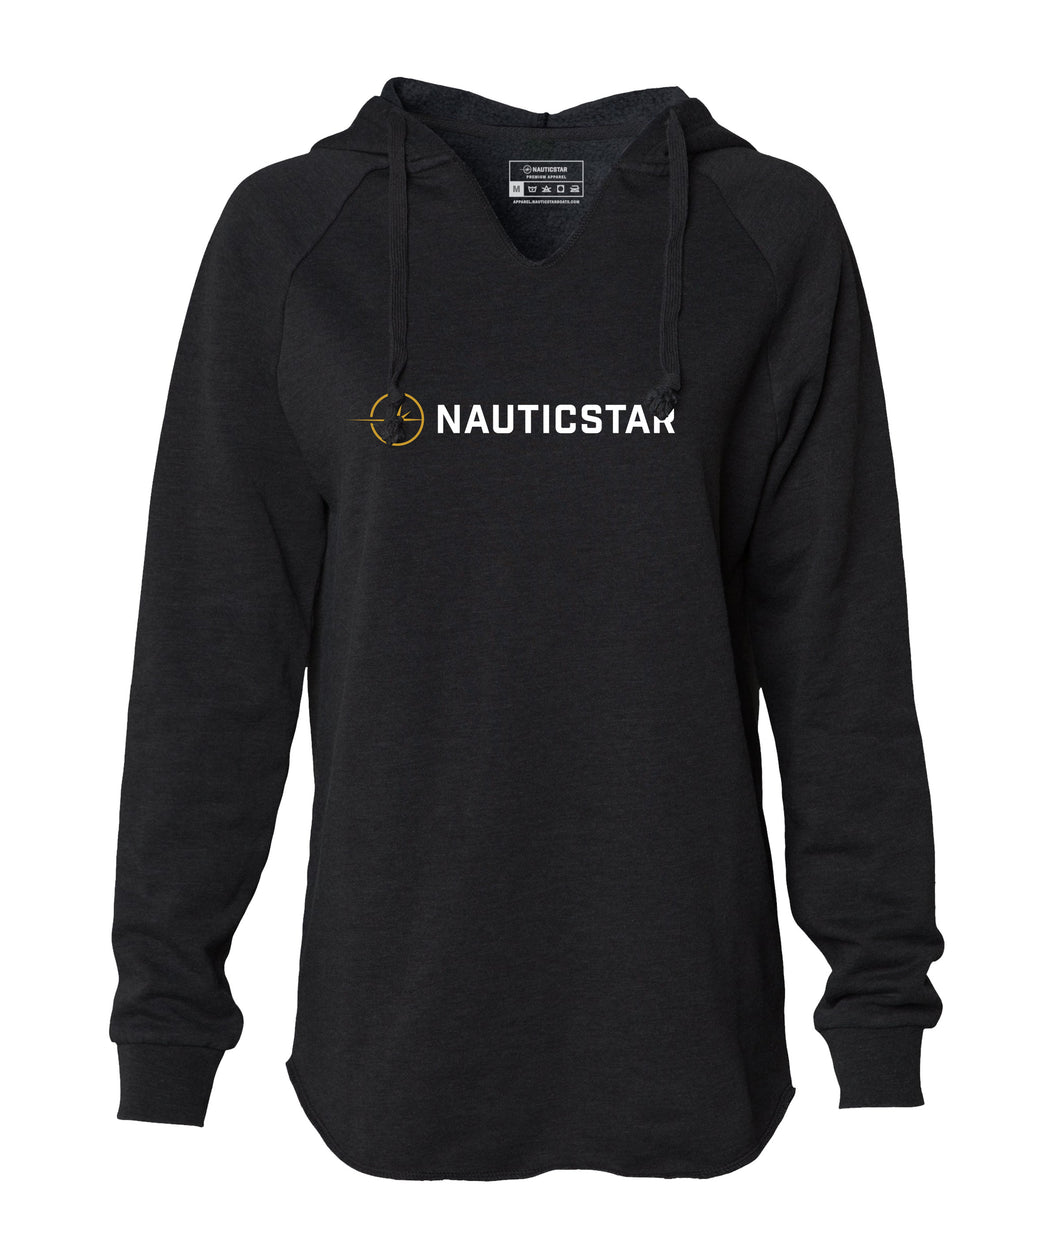 NauticStar Women's Hooded Sweatshirt - Black